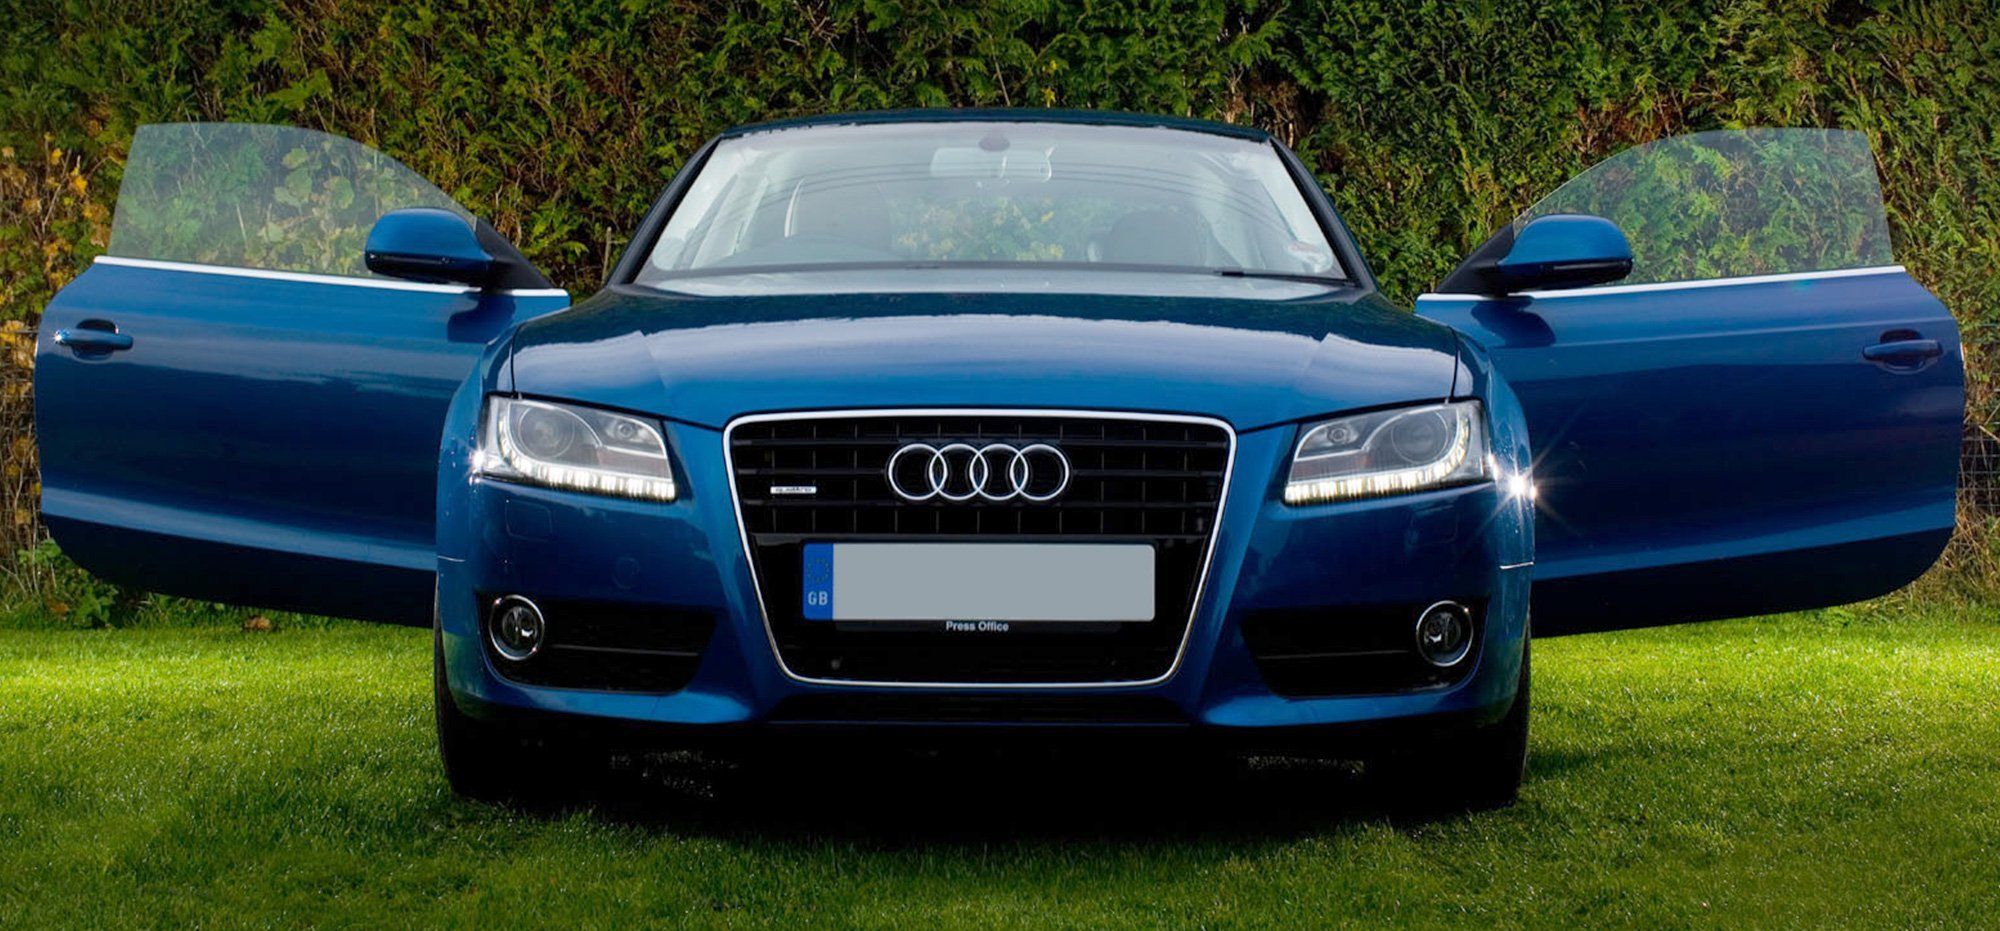 Blue Audi car